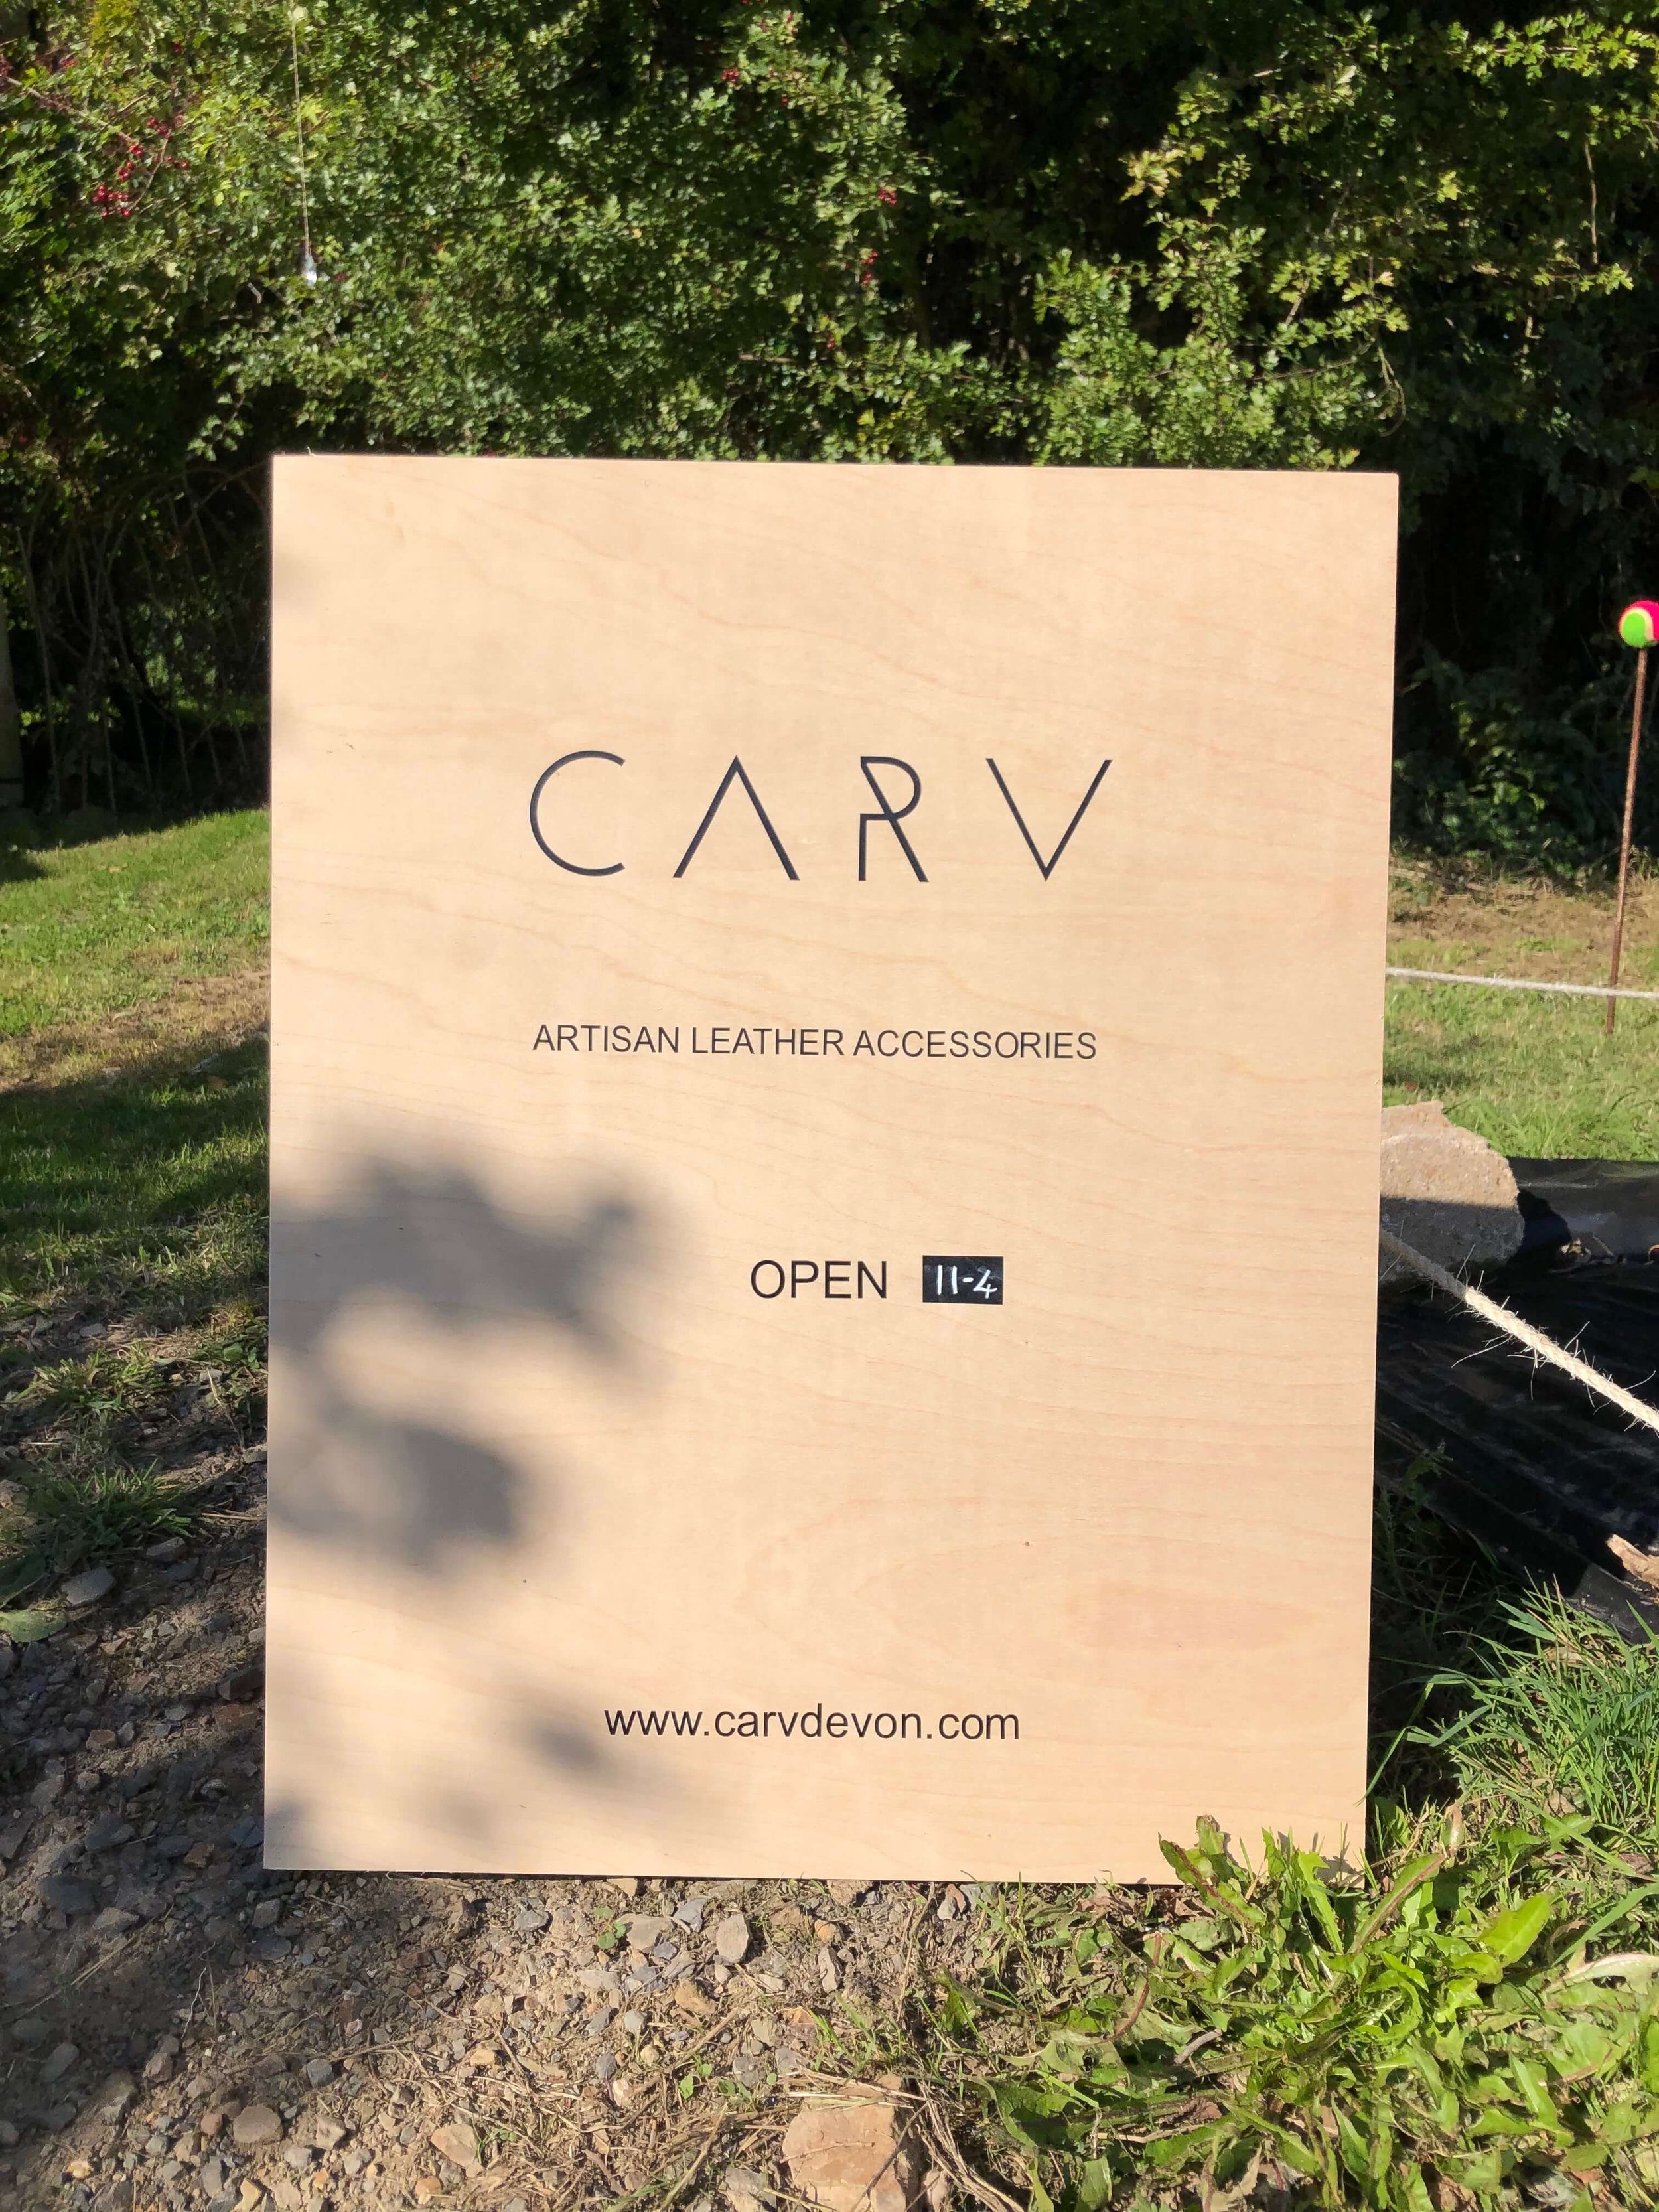 CARV studio - the home of the British designer-maker slow fashion brand in Devon UK